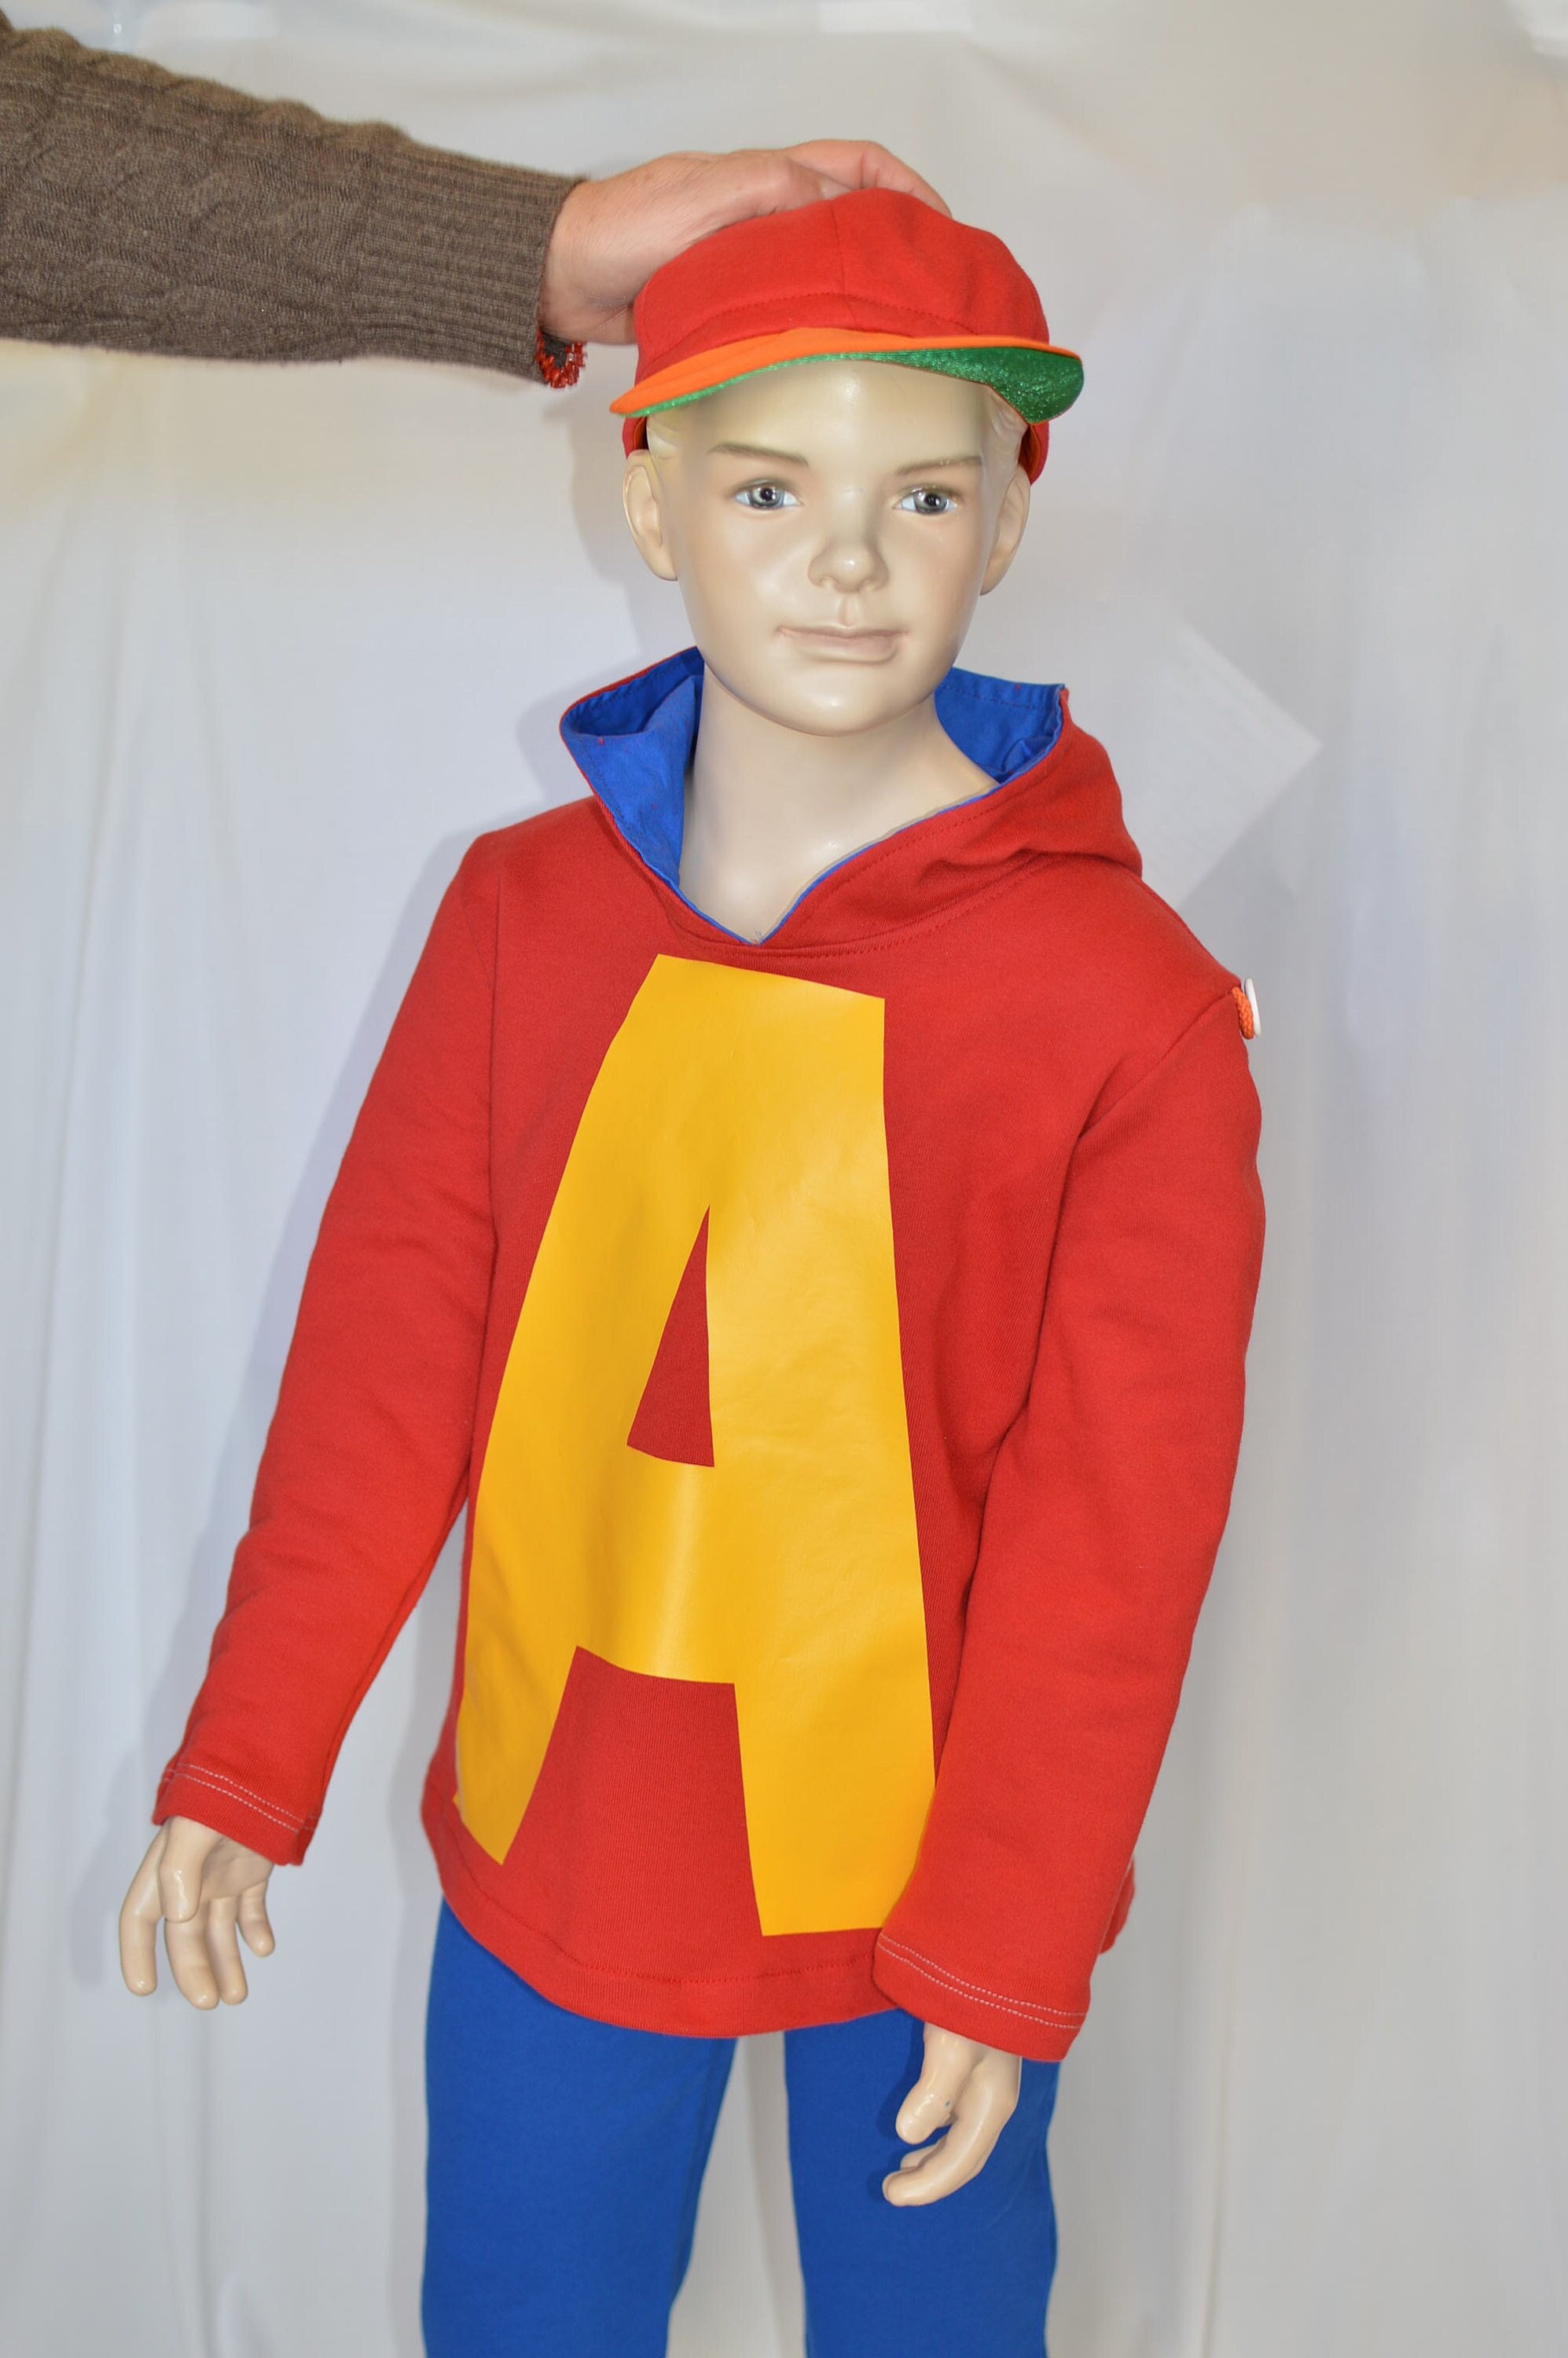 Alvin costume - Etsy.de